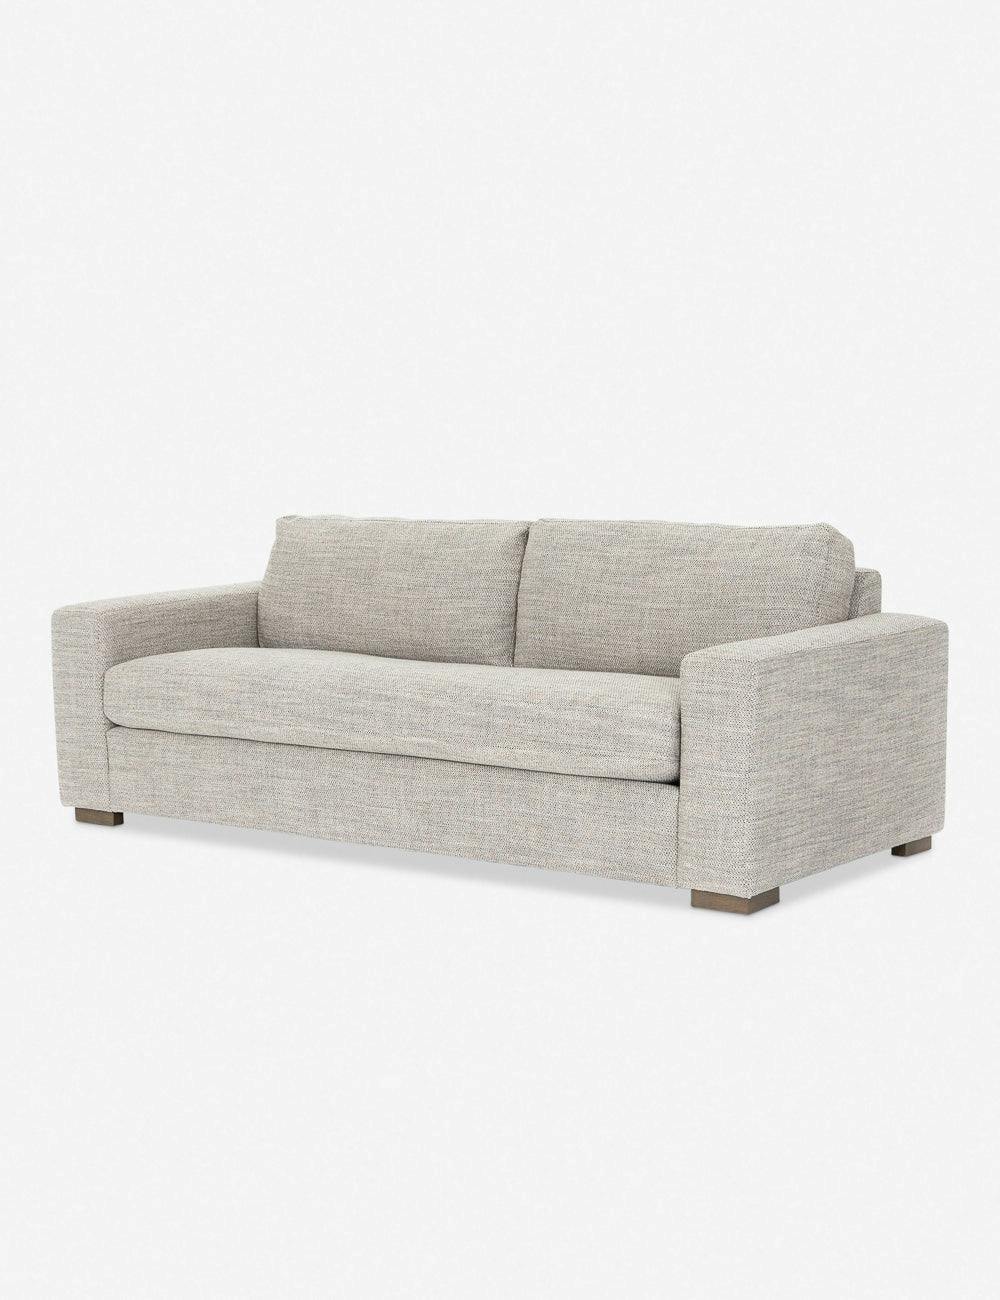 Derbie 86" Gray Upholstered Sofa